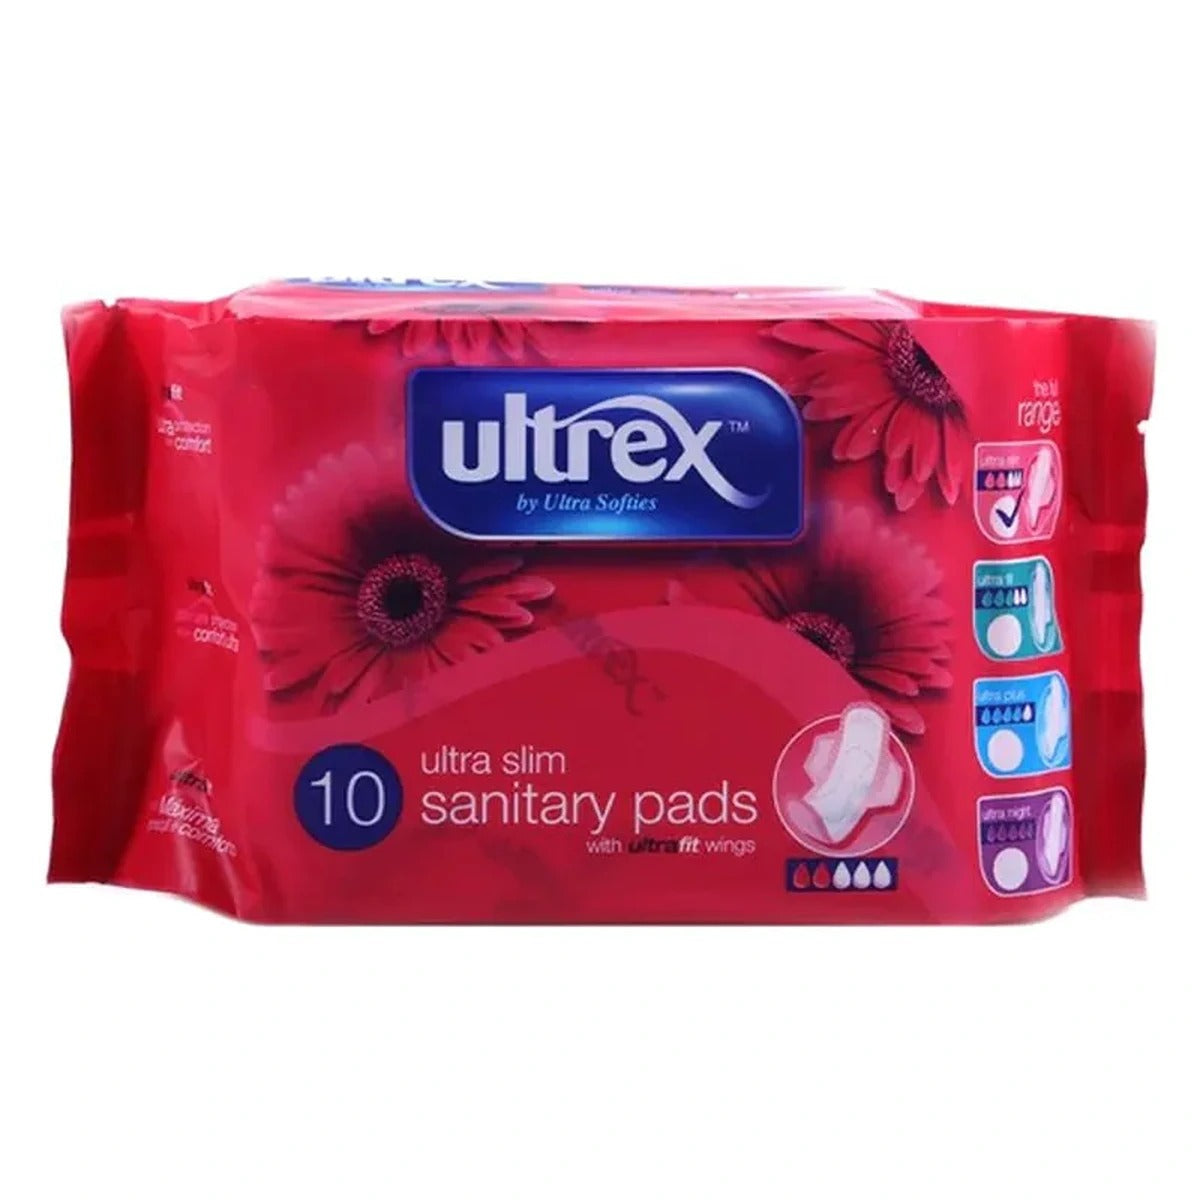 Ultrex - 10 Ultra Slim Sanitary Pads - Continental Food Store